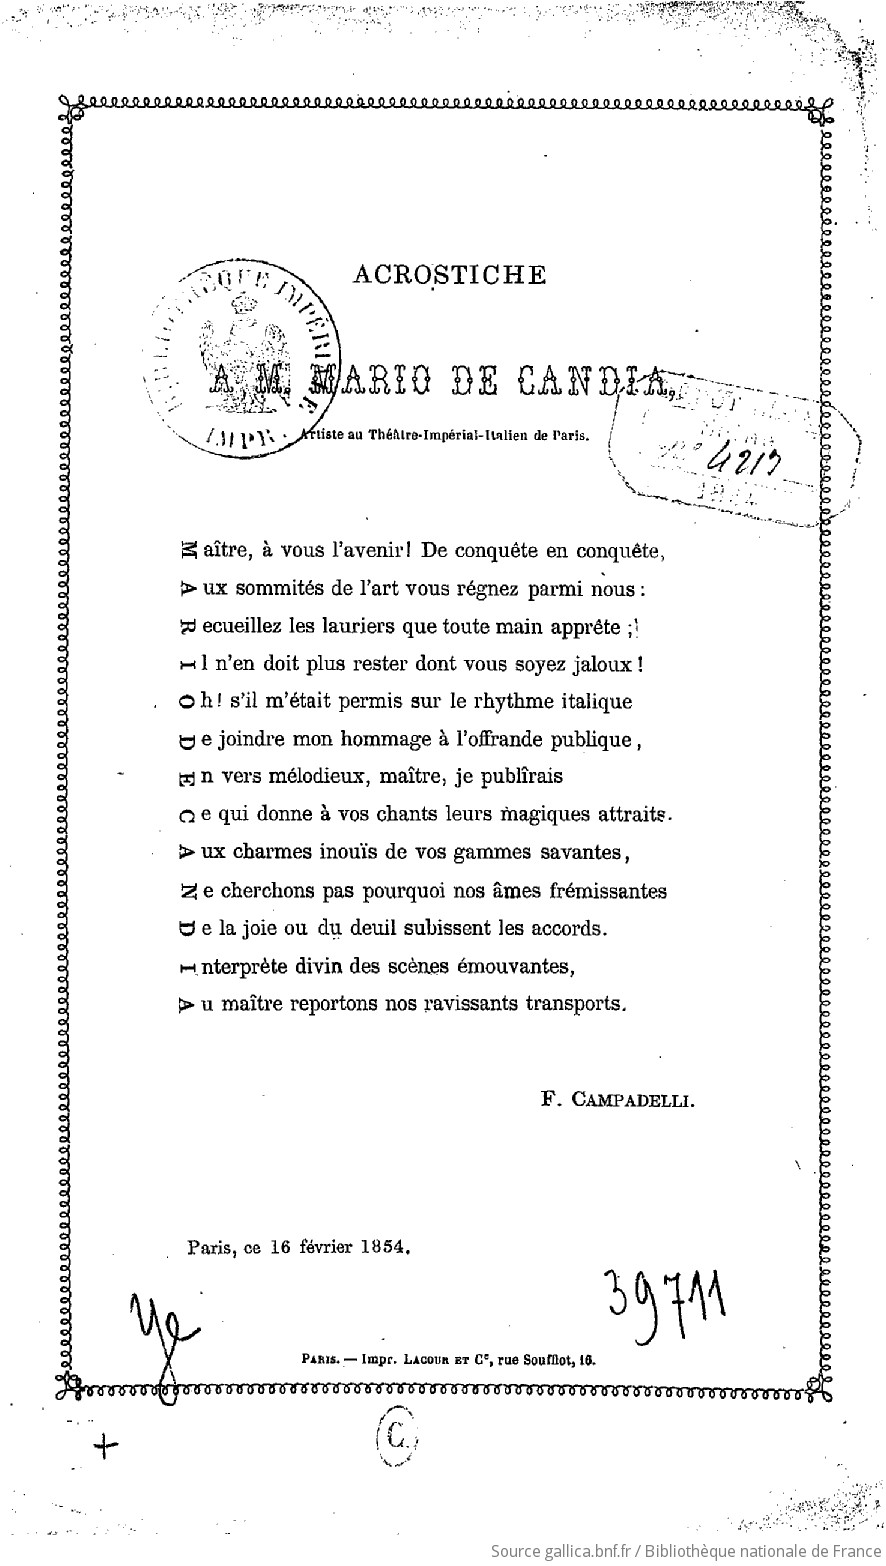 Acrostiche A M Mario De Candia Artiste Du Theatre Imperial Italien De Paris Signe F Campadelli